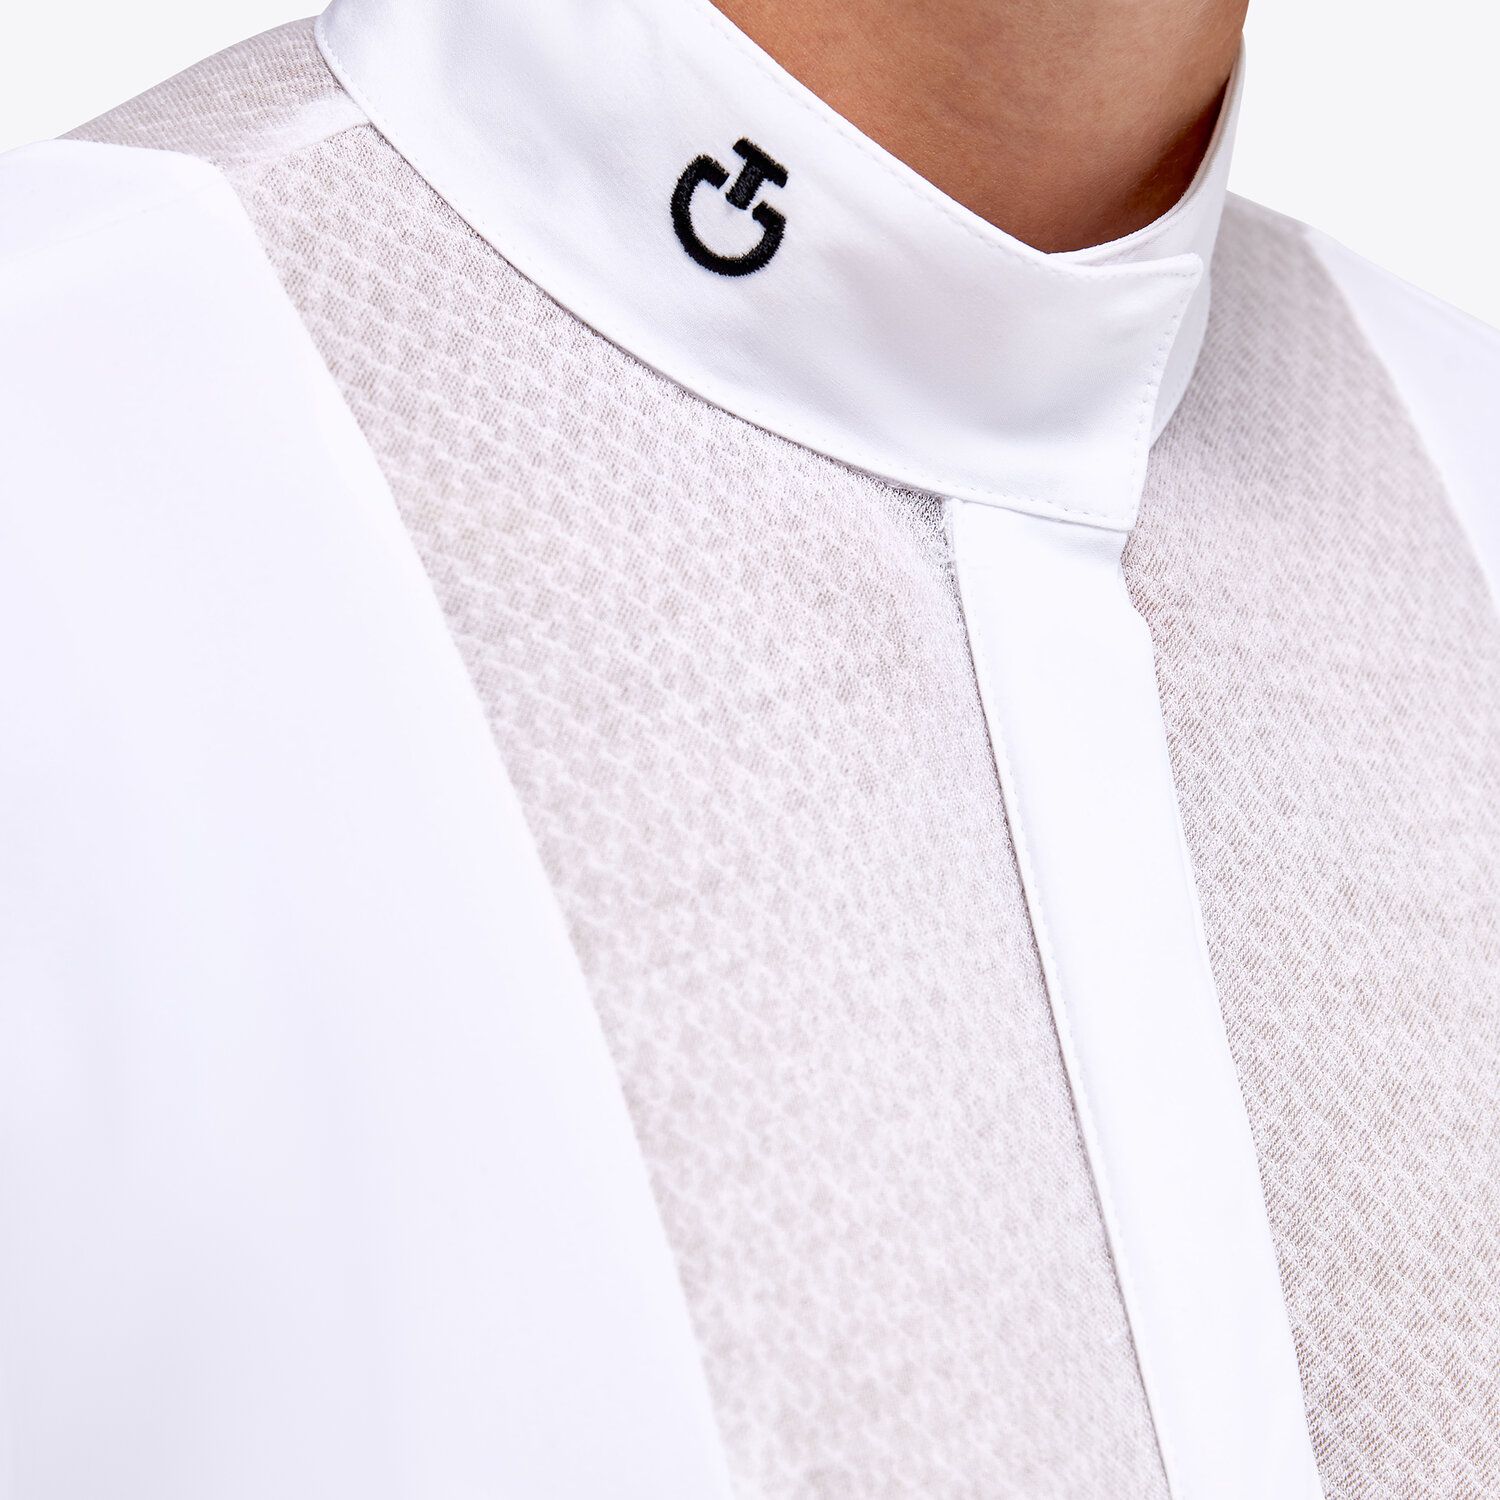 Cavalleria Toscana Women’s jersey and poplin shirt WHITE/KNIT-4